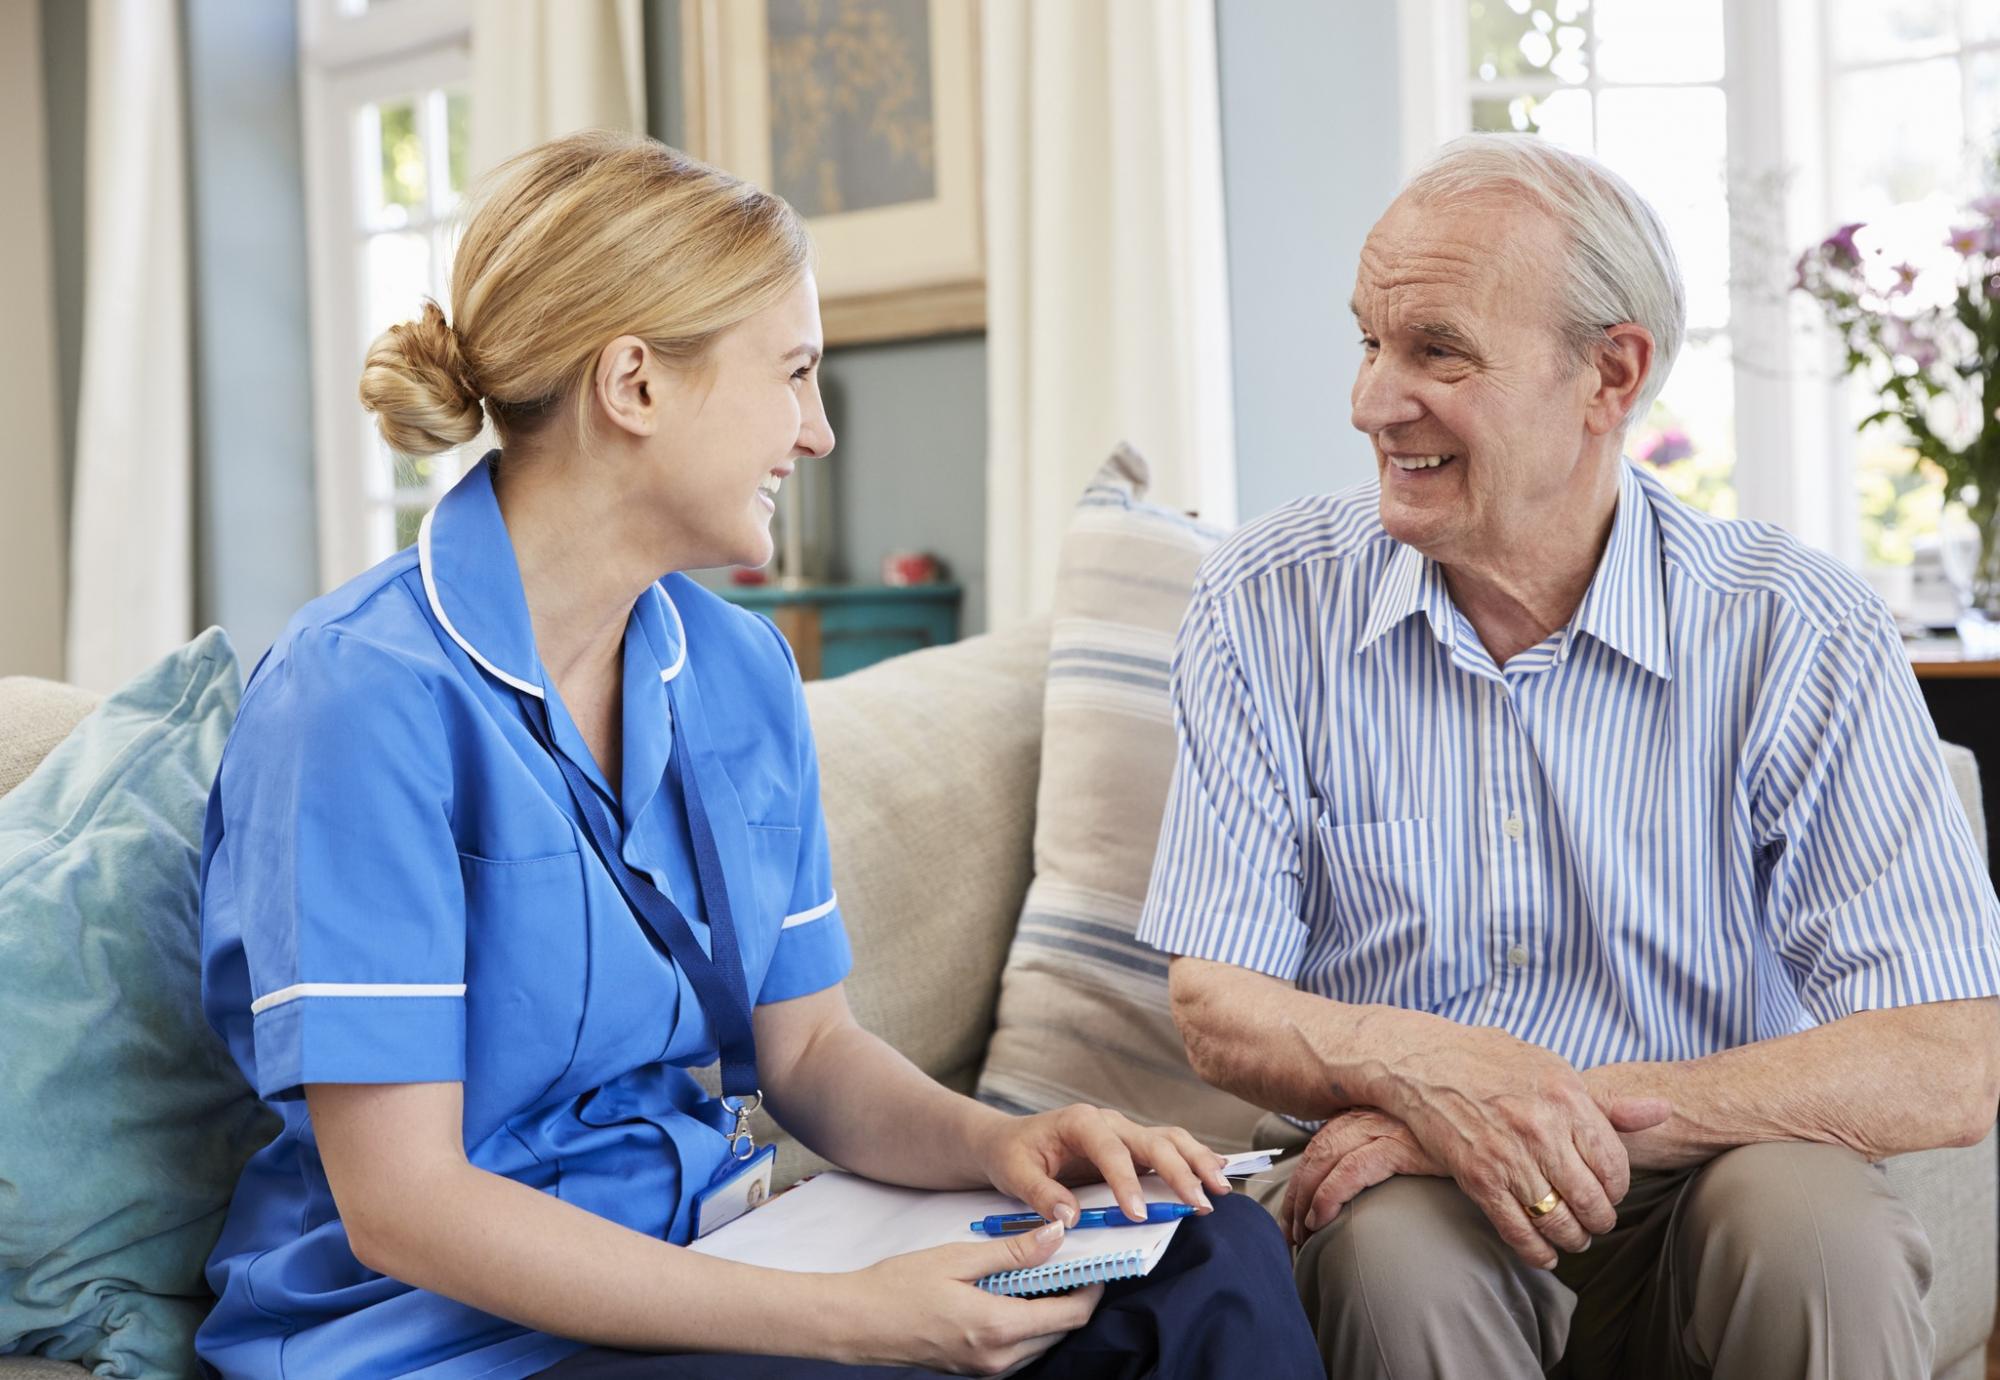 Social care nurse talking with an elderly patient